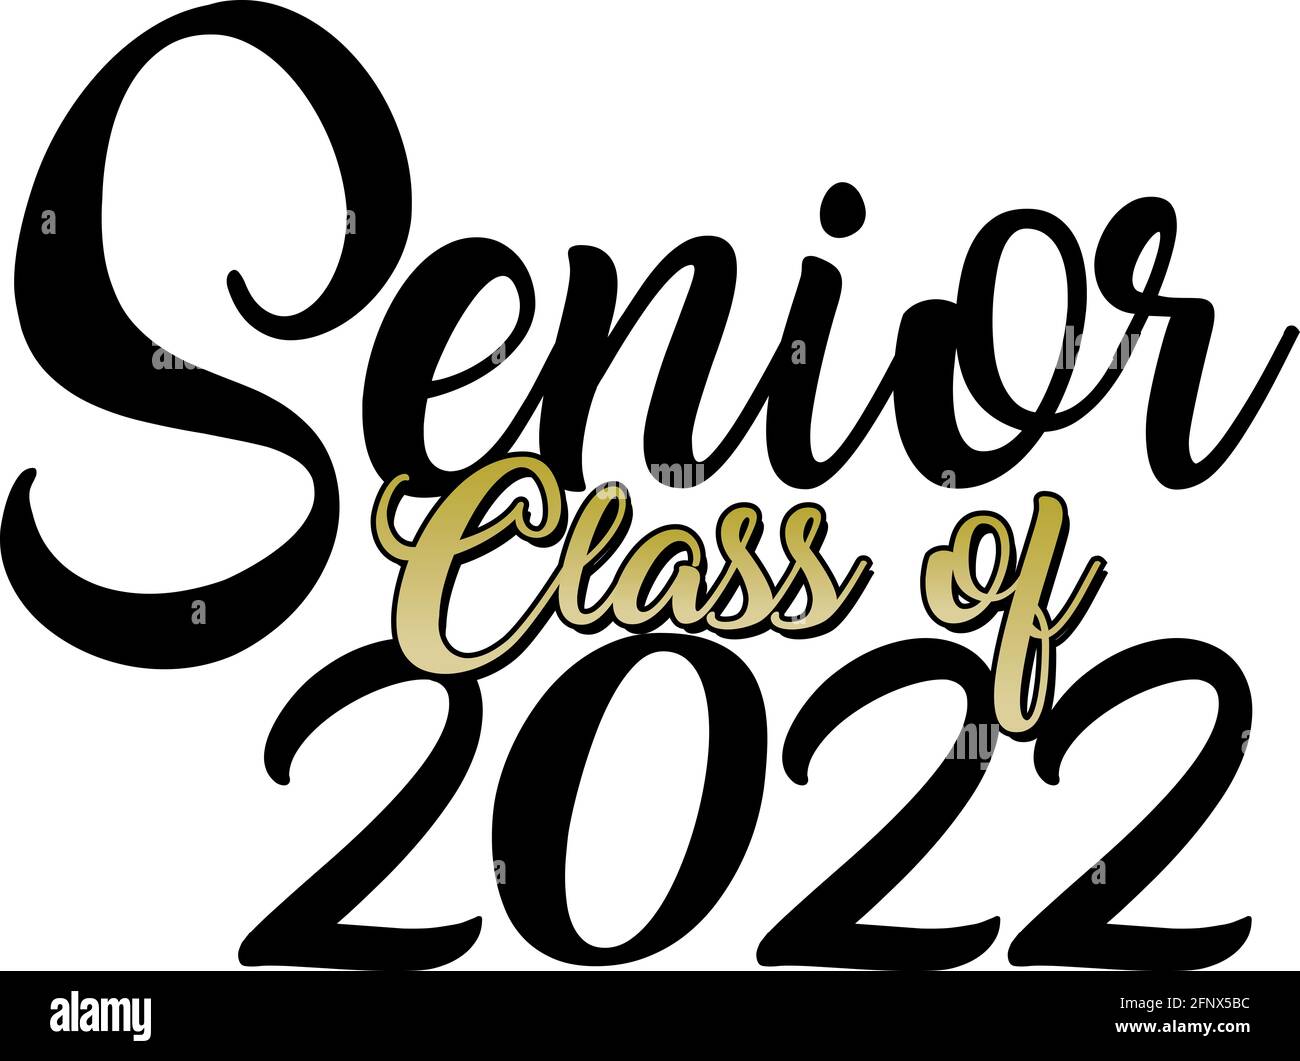 Senior class of 2022 gold script Stock Photo